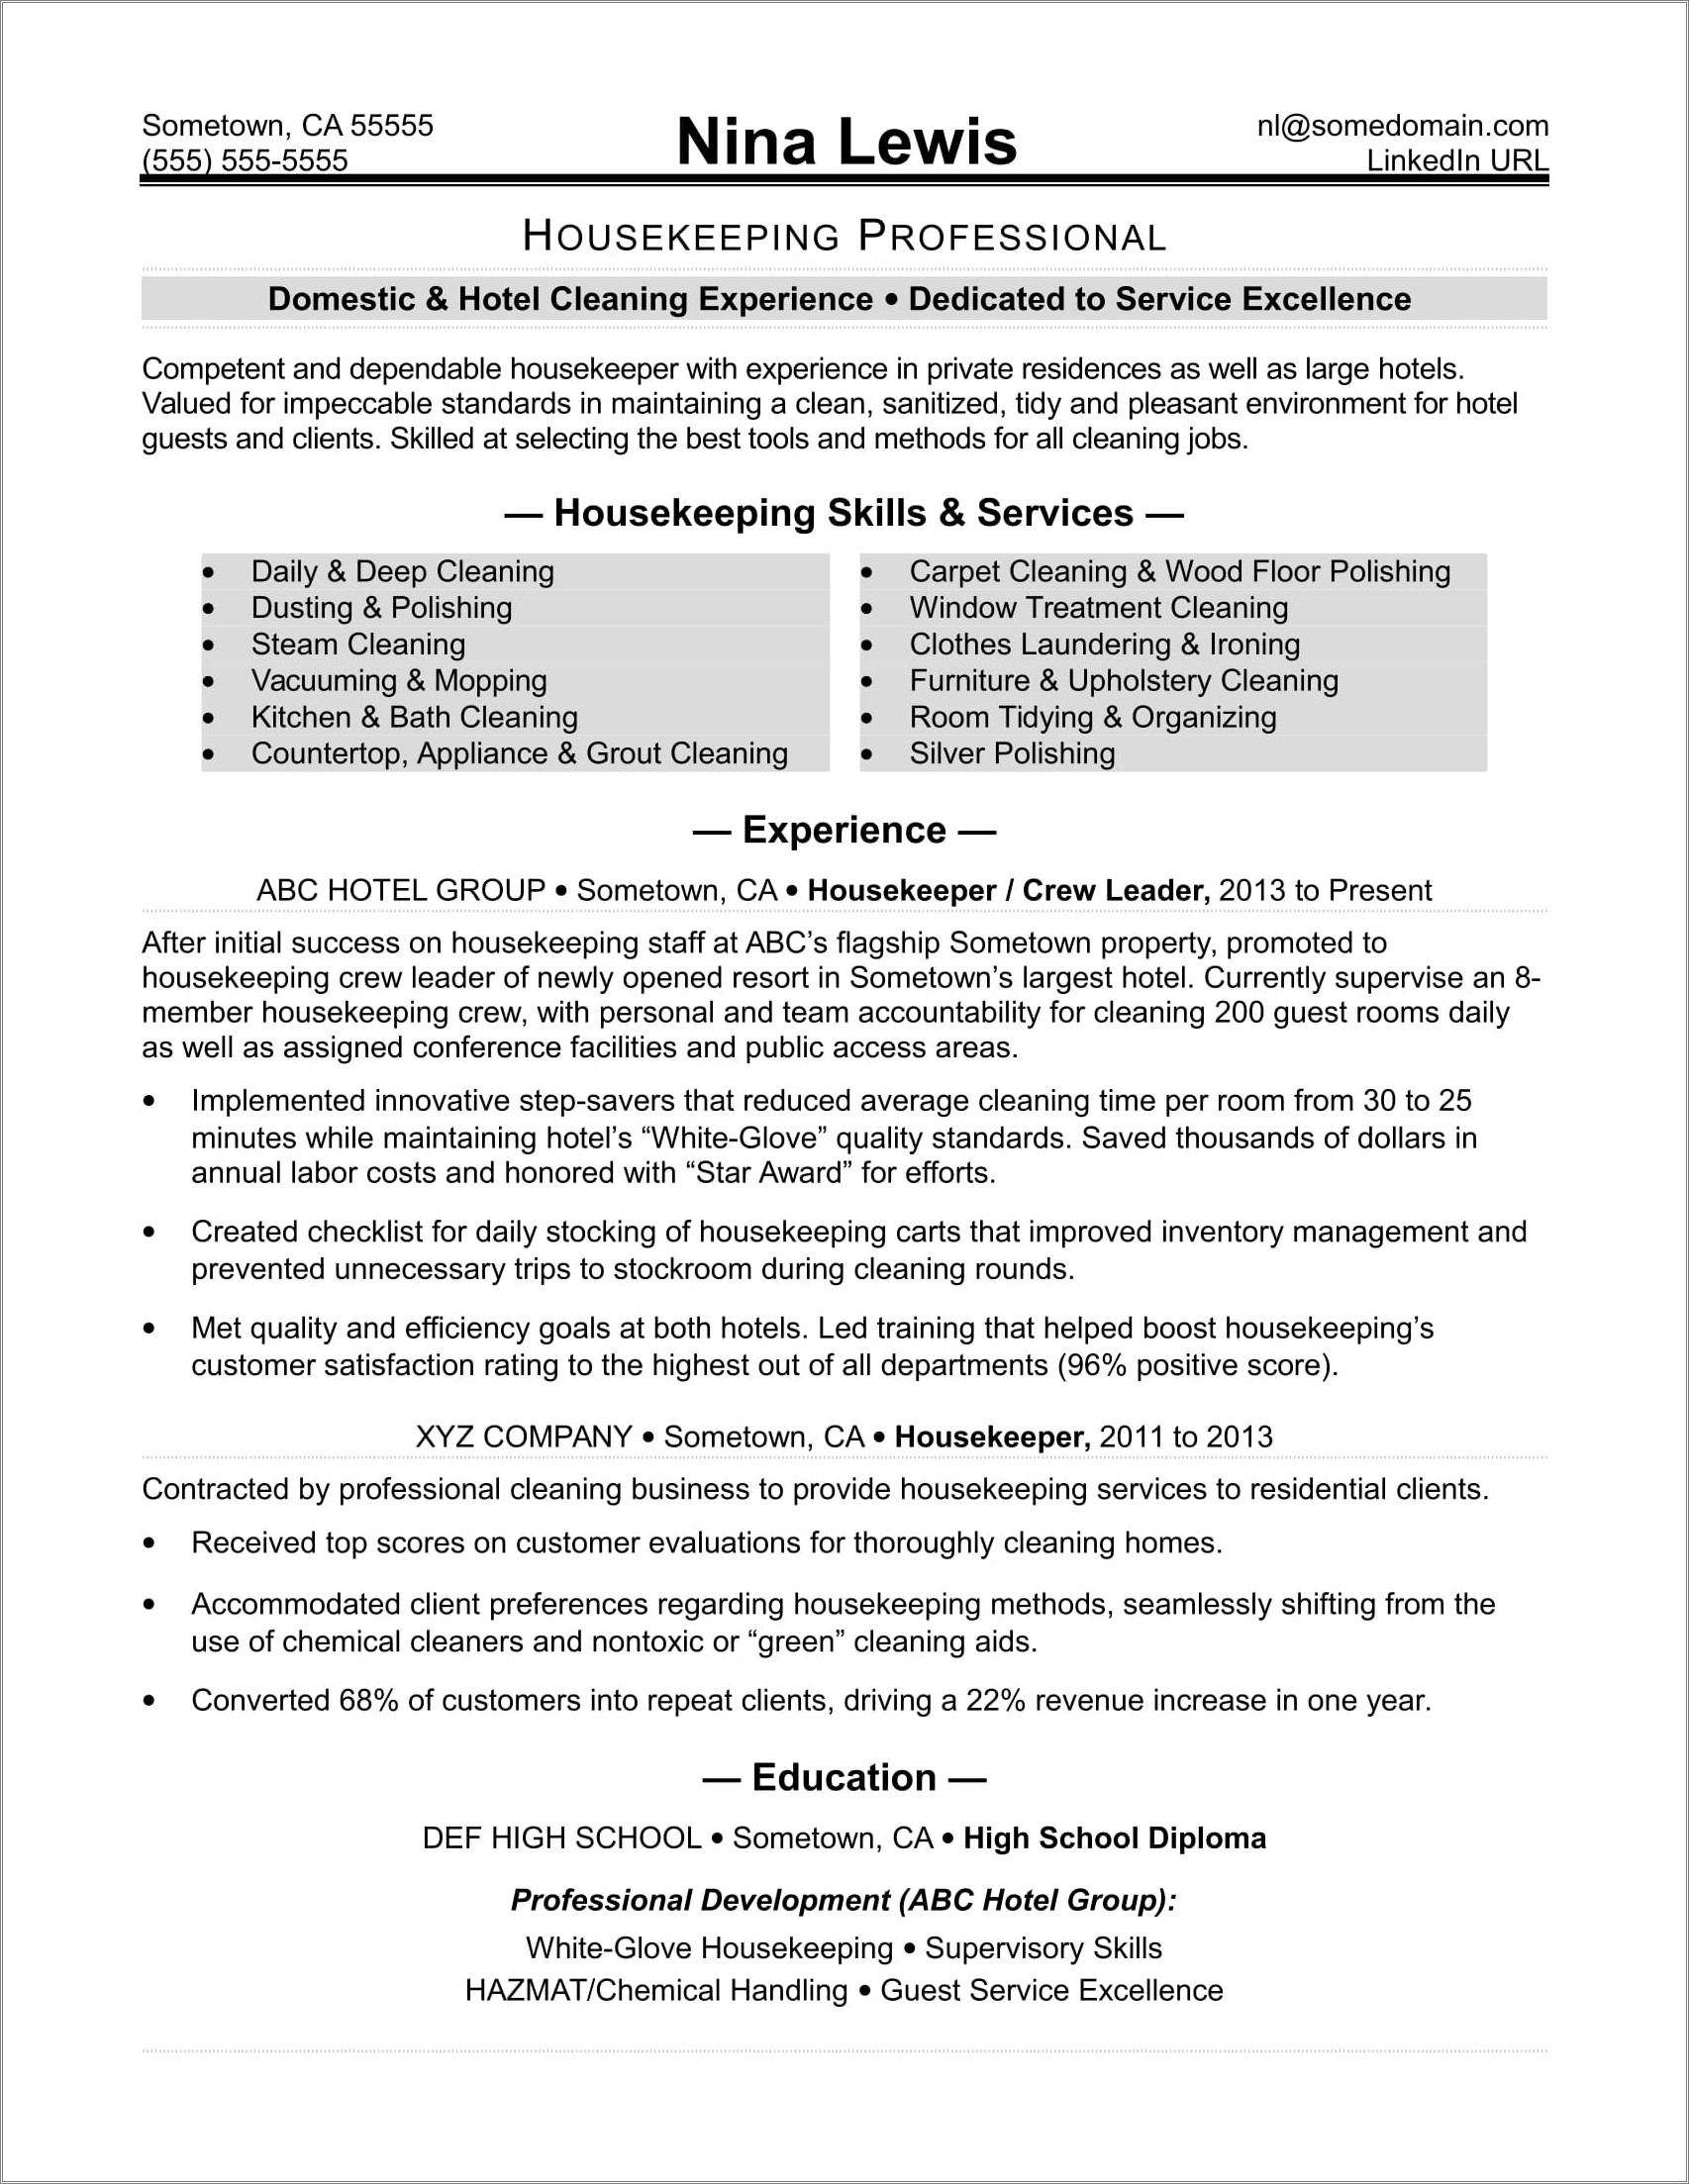 Resume Work Experience Job Description Maker